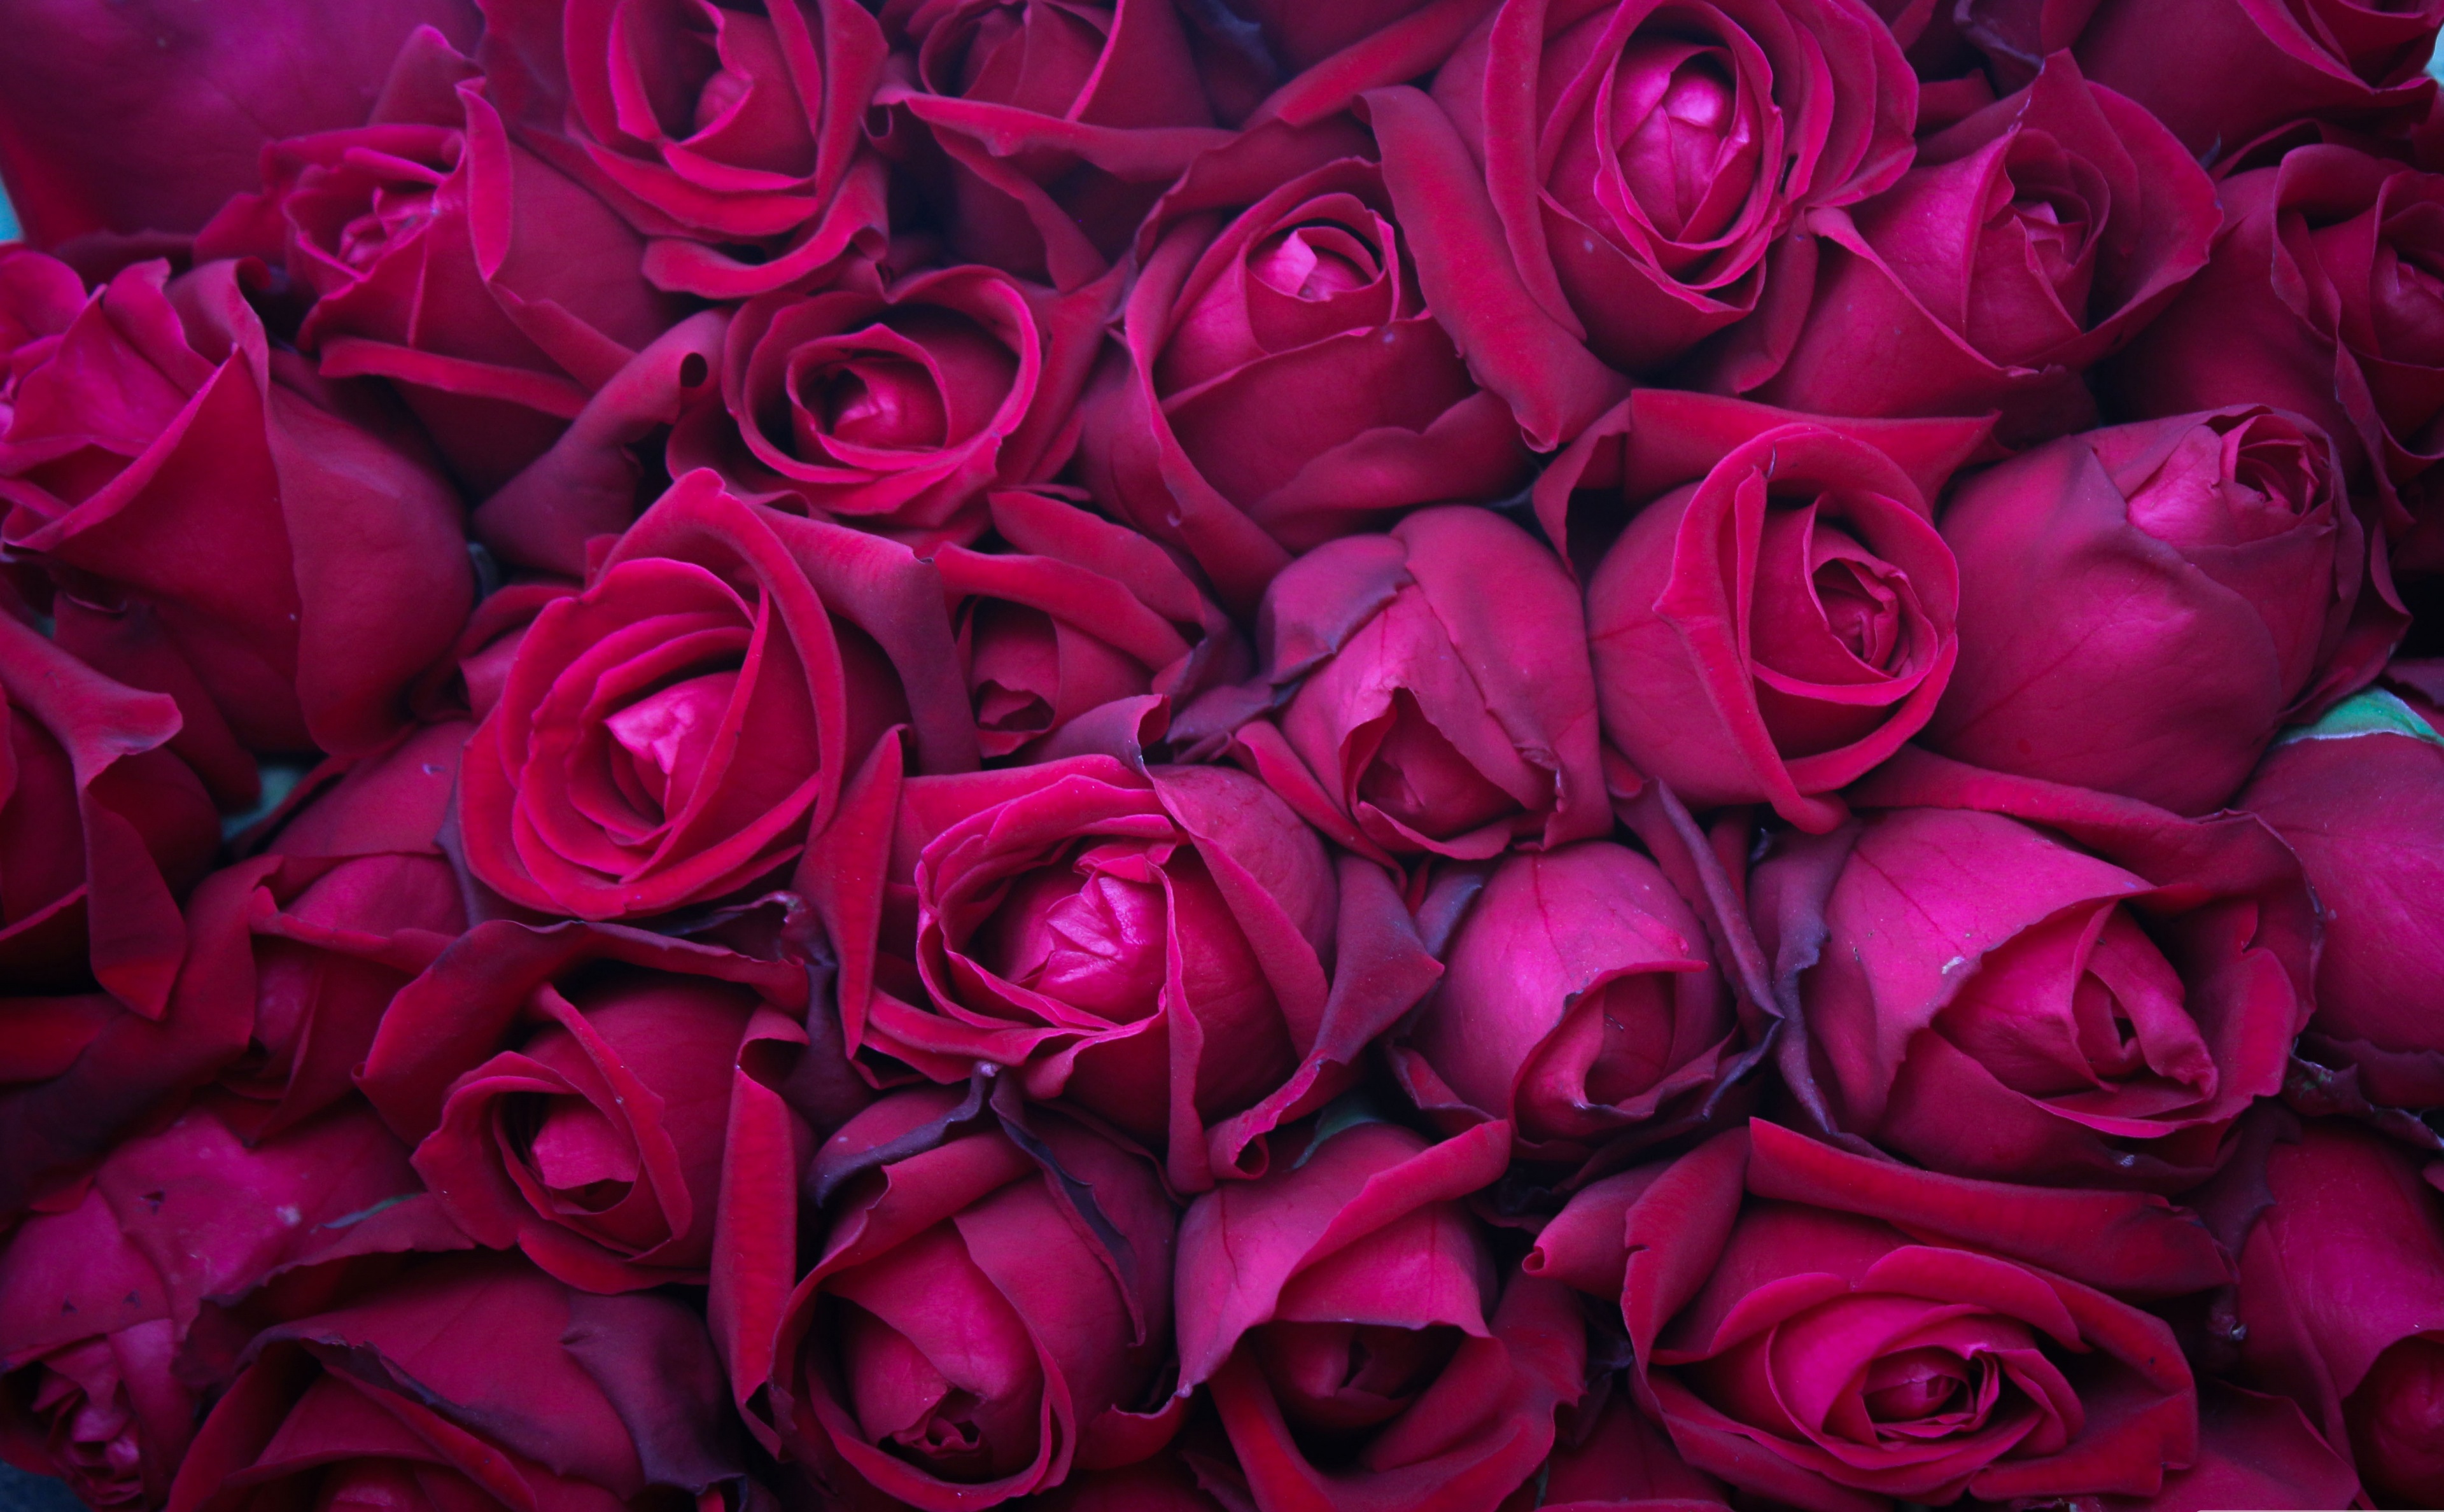 Magenta-Colored Roses